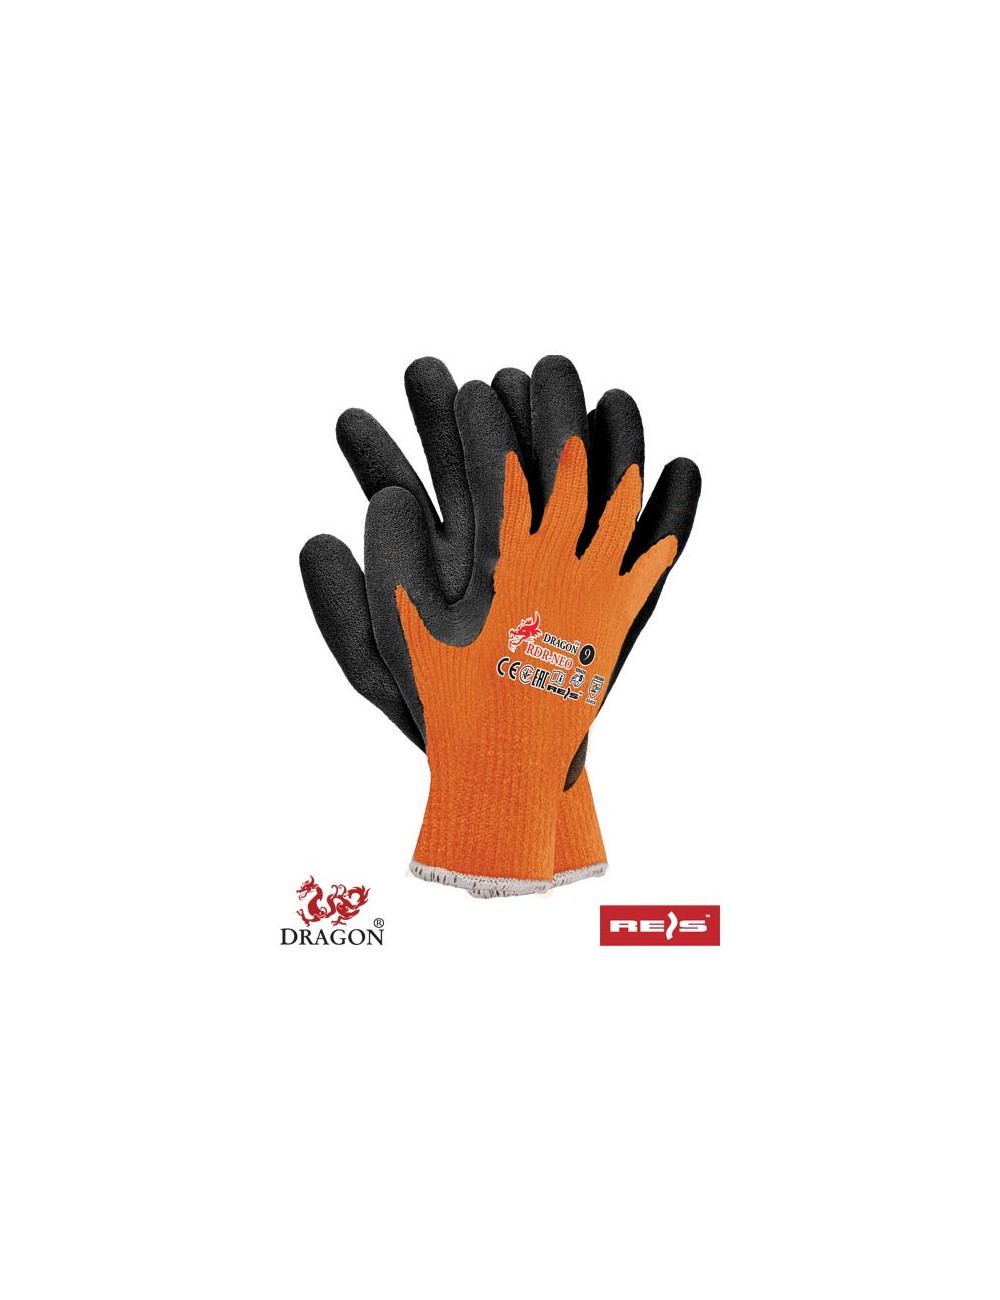 Protective gloves rdr-neo pb orange-black Reis